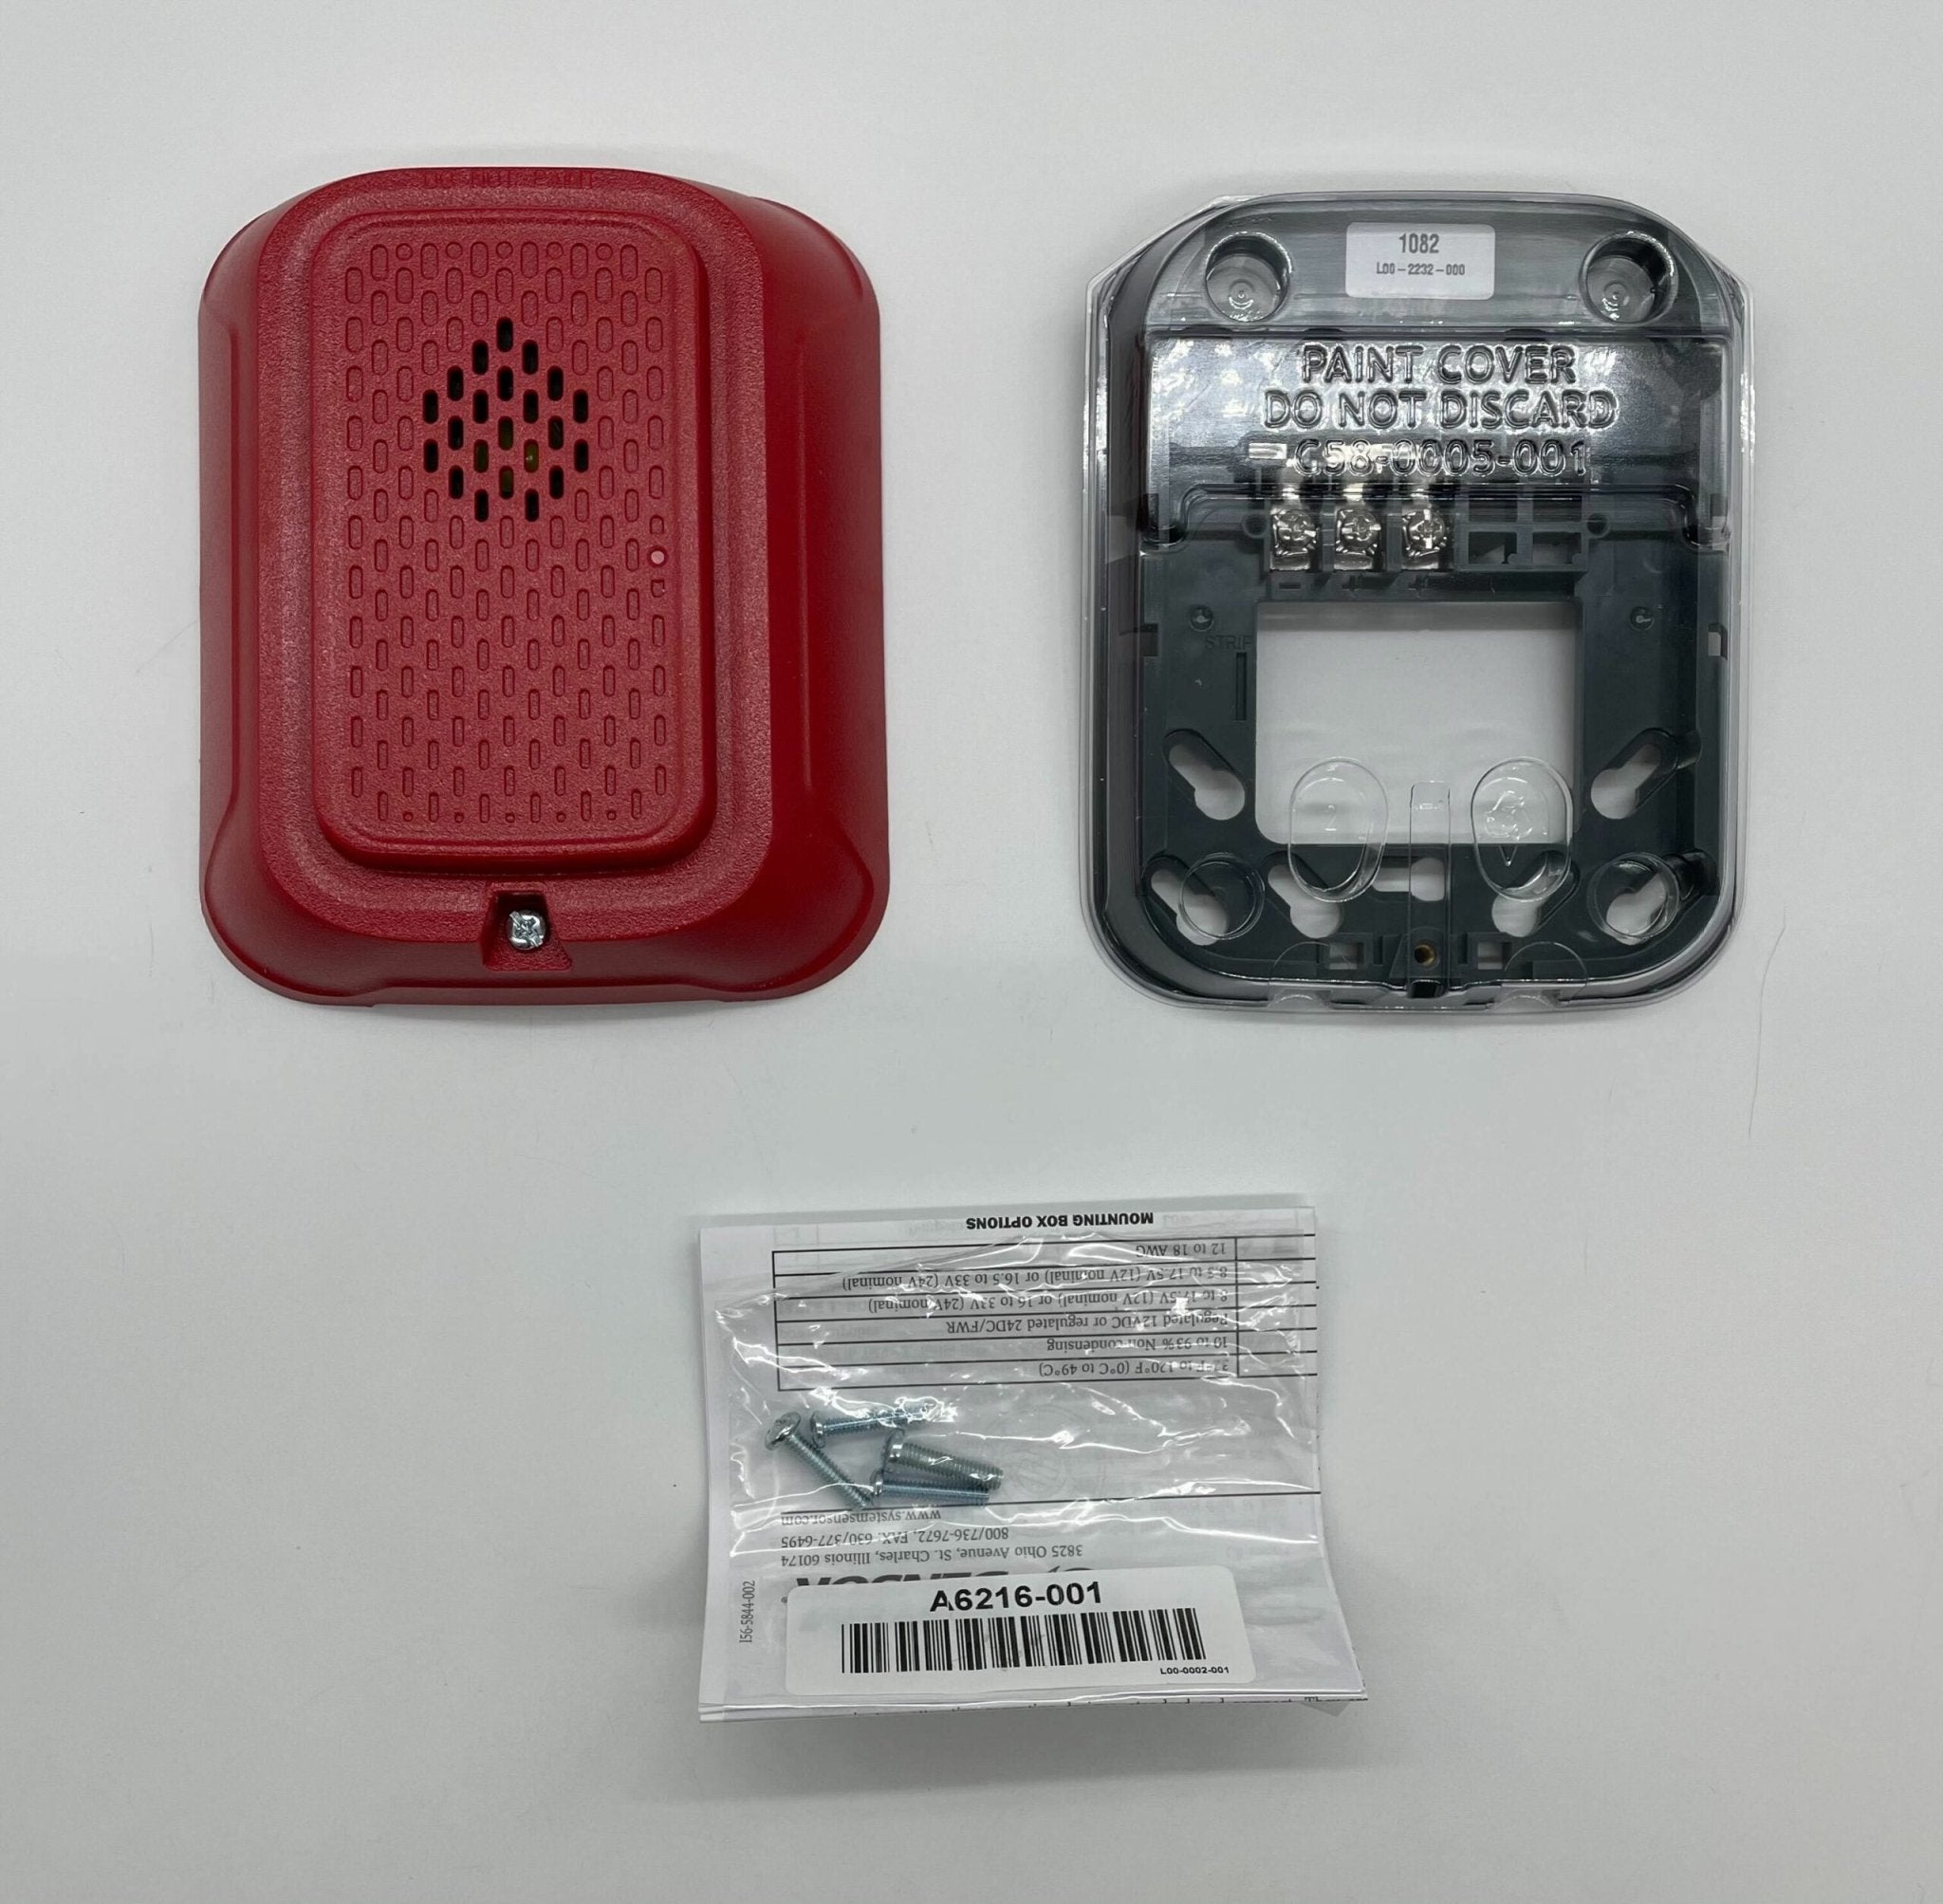 System Sensor CHRL - The Fire Alarm Supplier